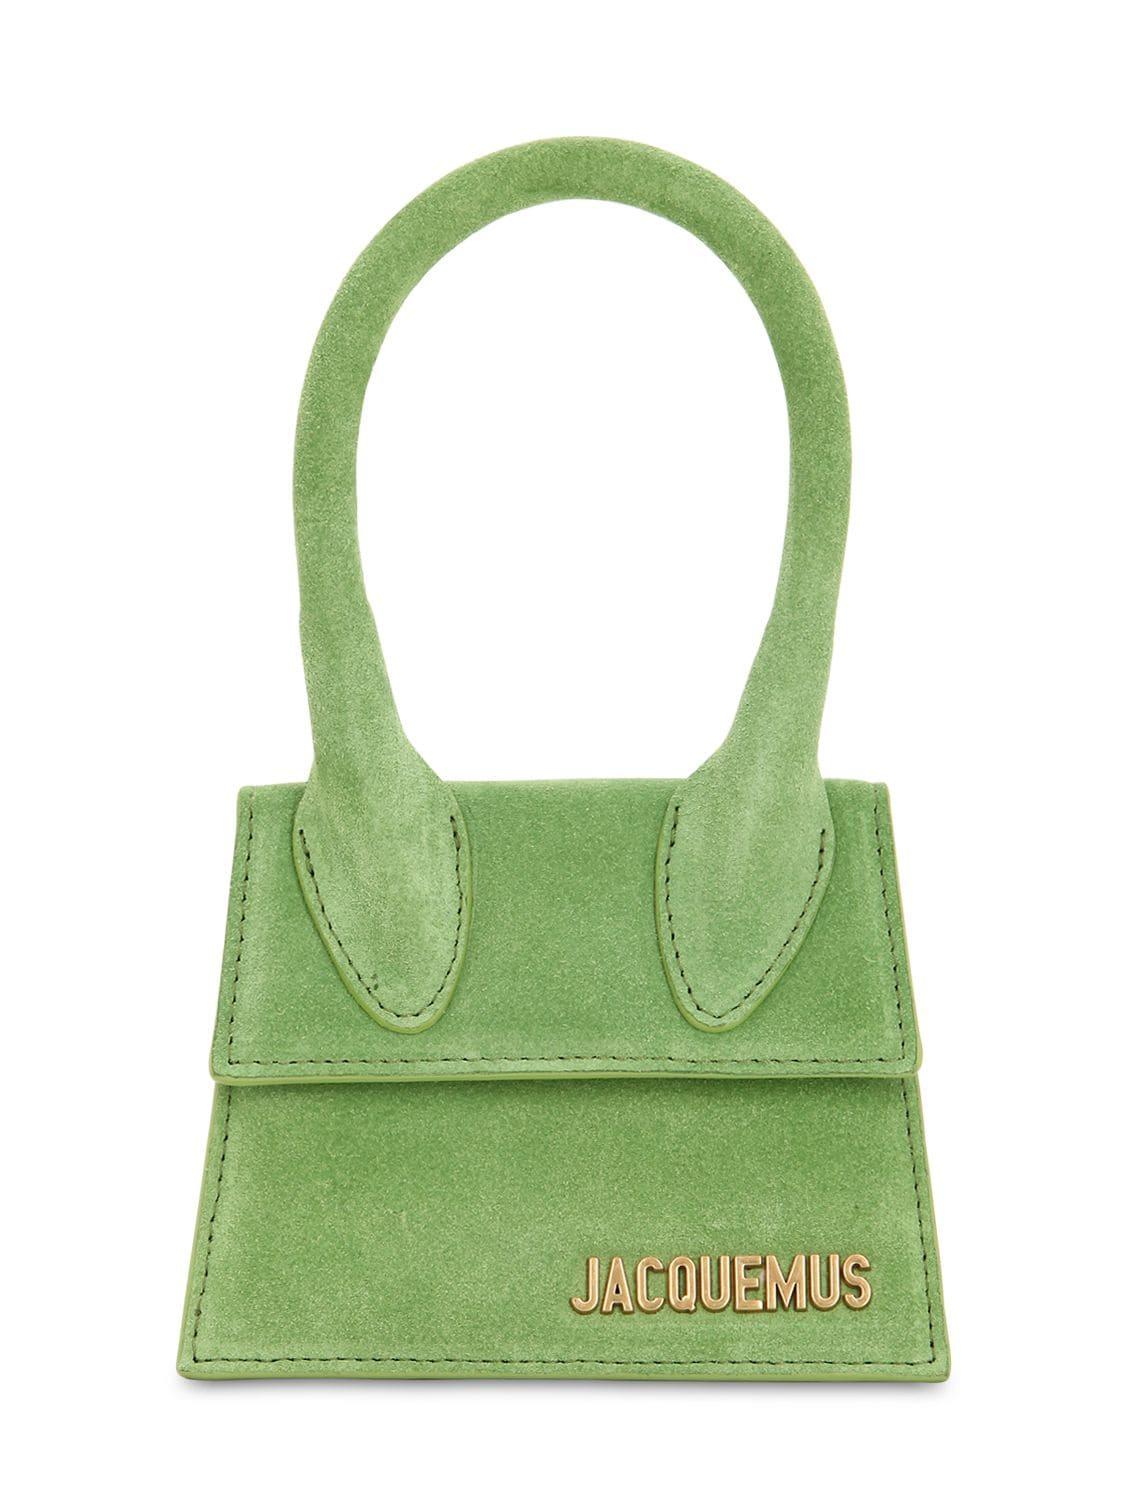 Jacquemus Le Chiquito Mini Suede Bag in Green